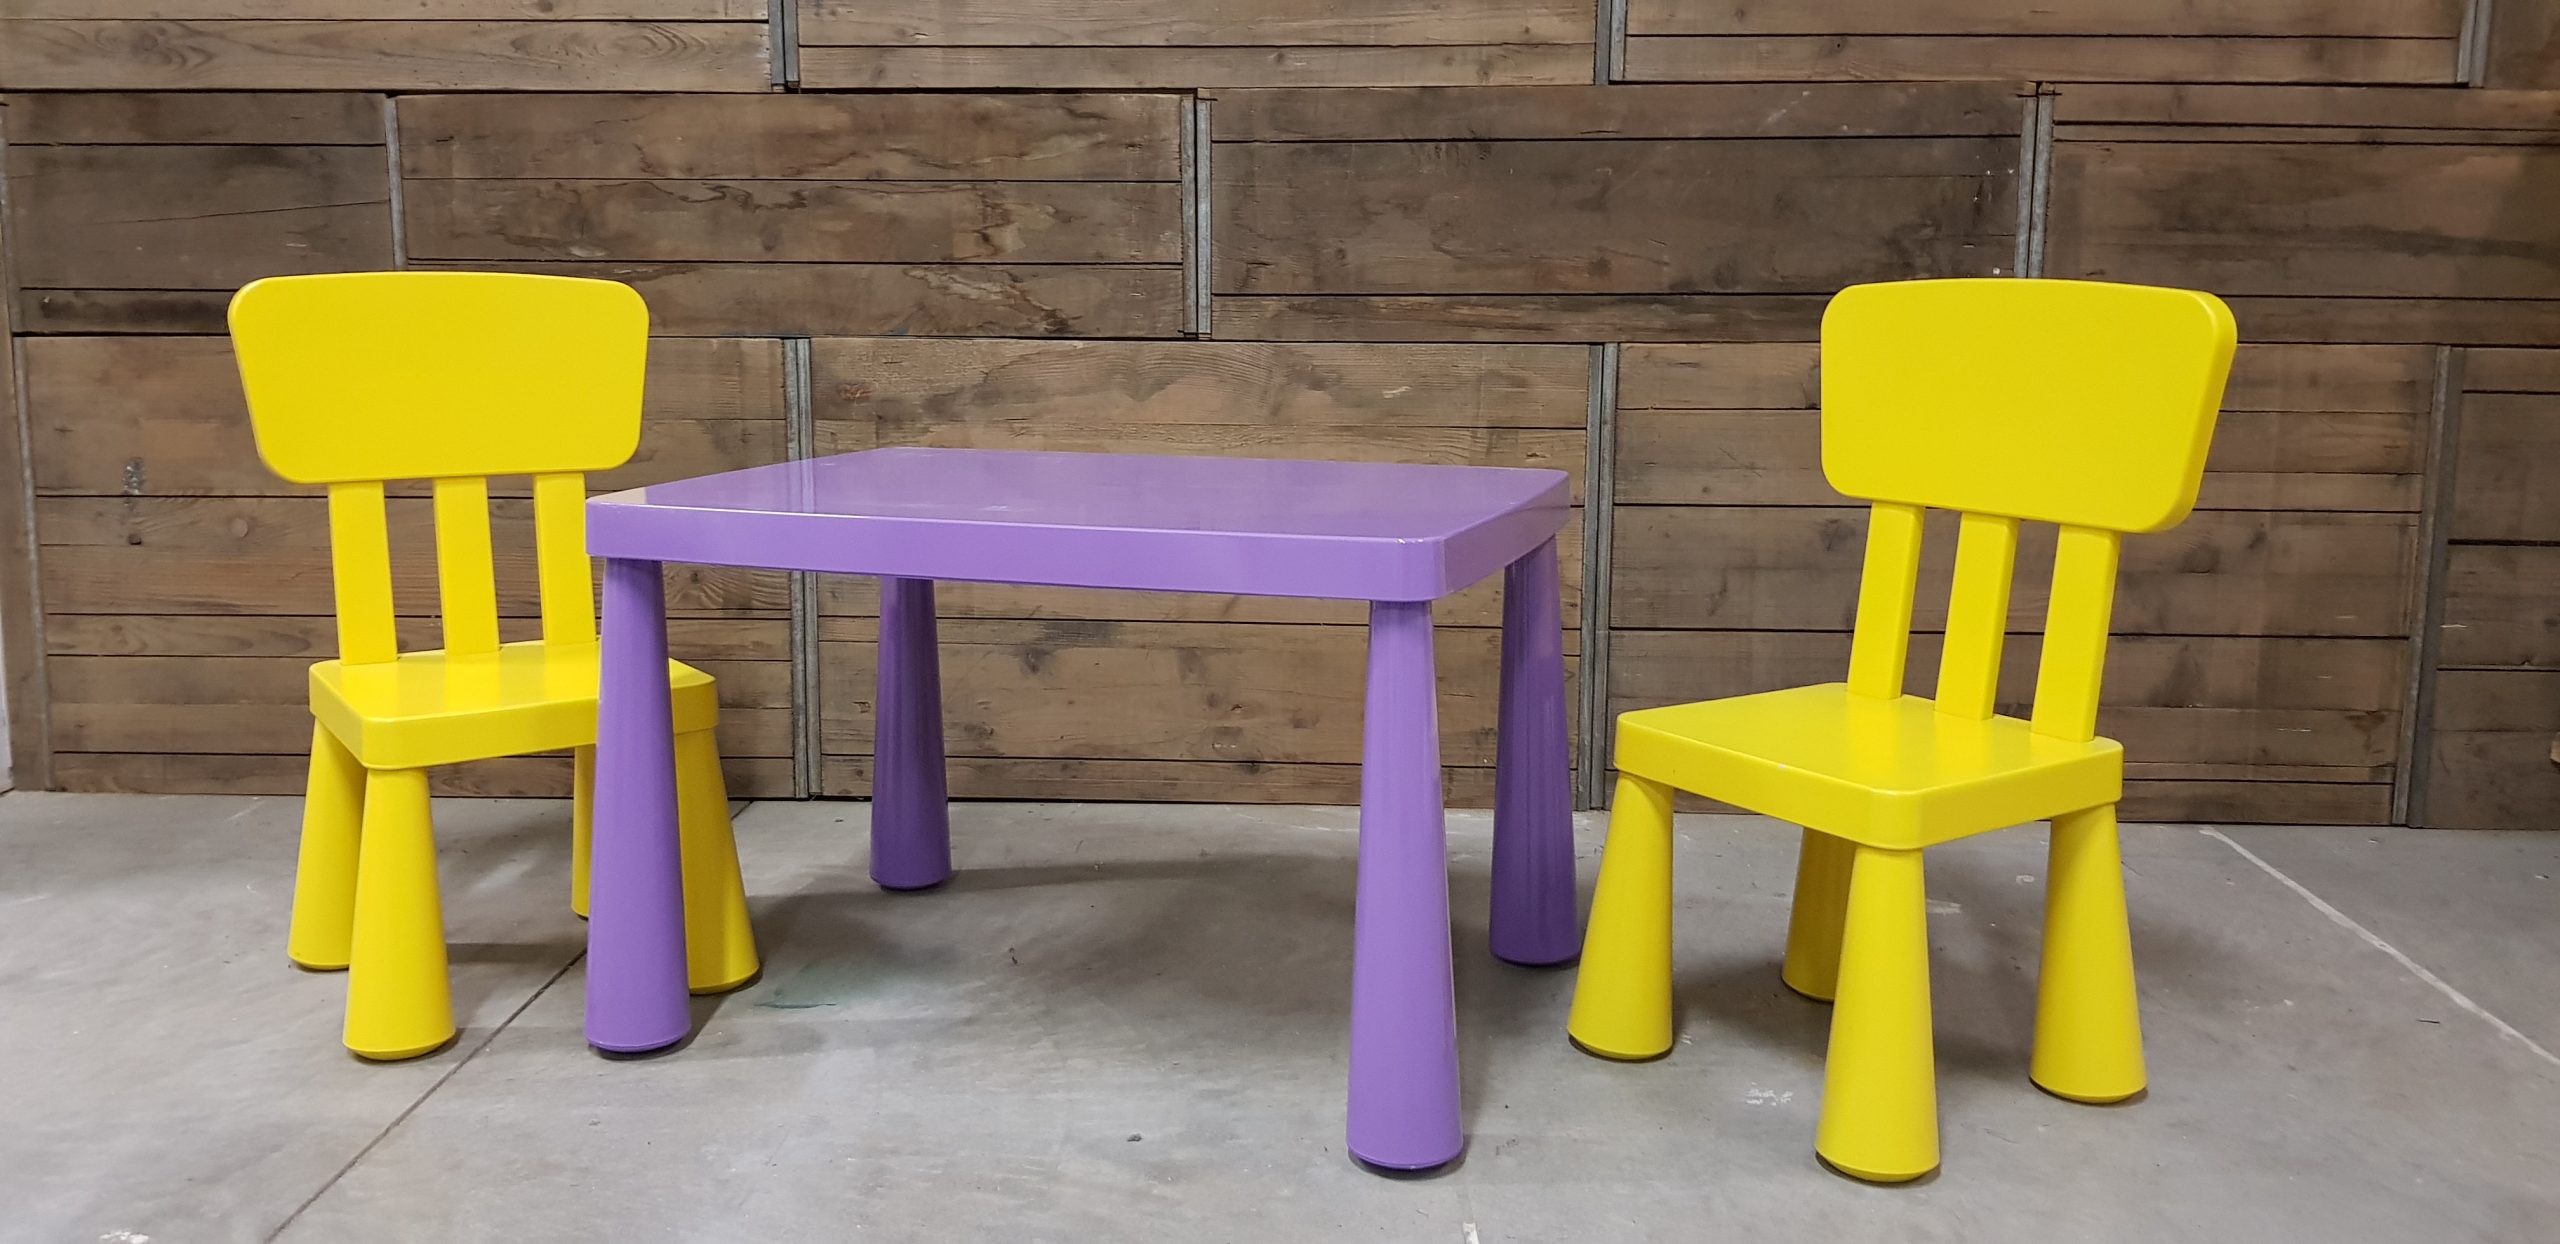 gekleurde tafel en stoeltjes